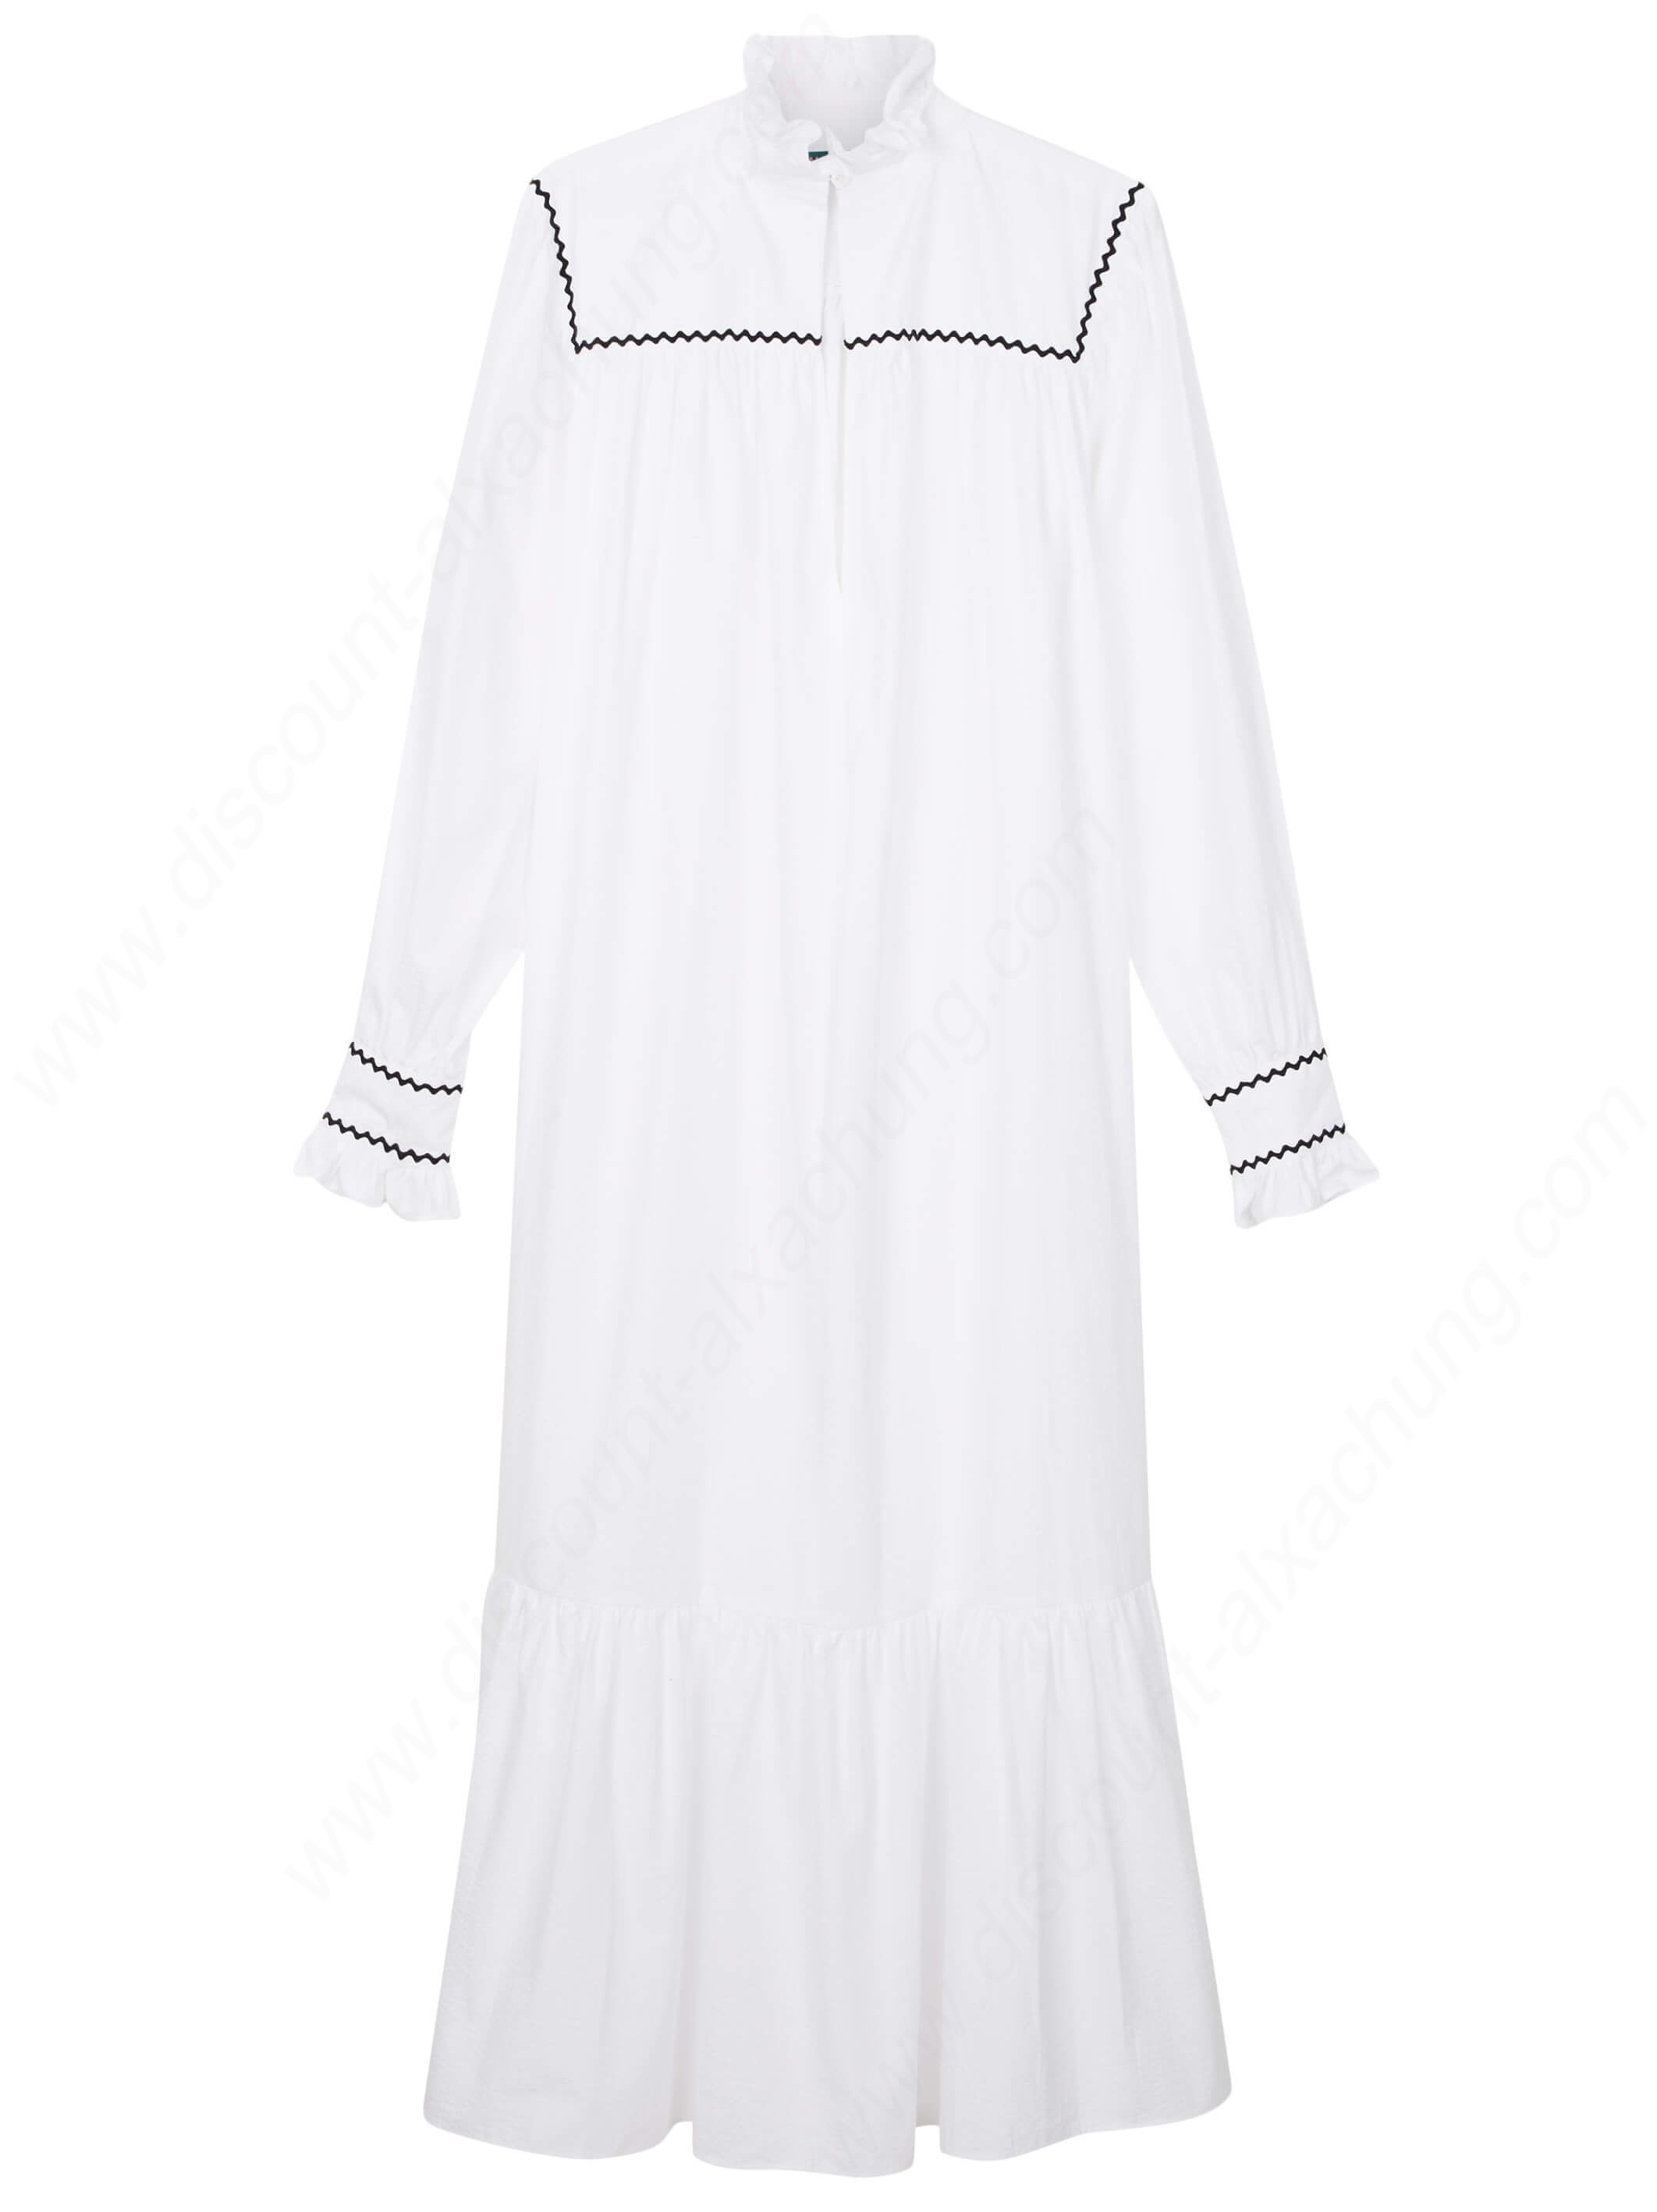 Alexachung Ruffle Collar Peasant Dress - Alexachung Ruffle Collar Peasant Dress